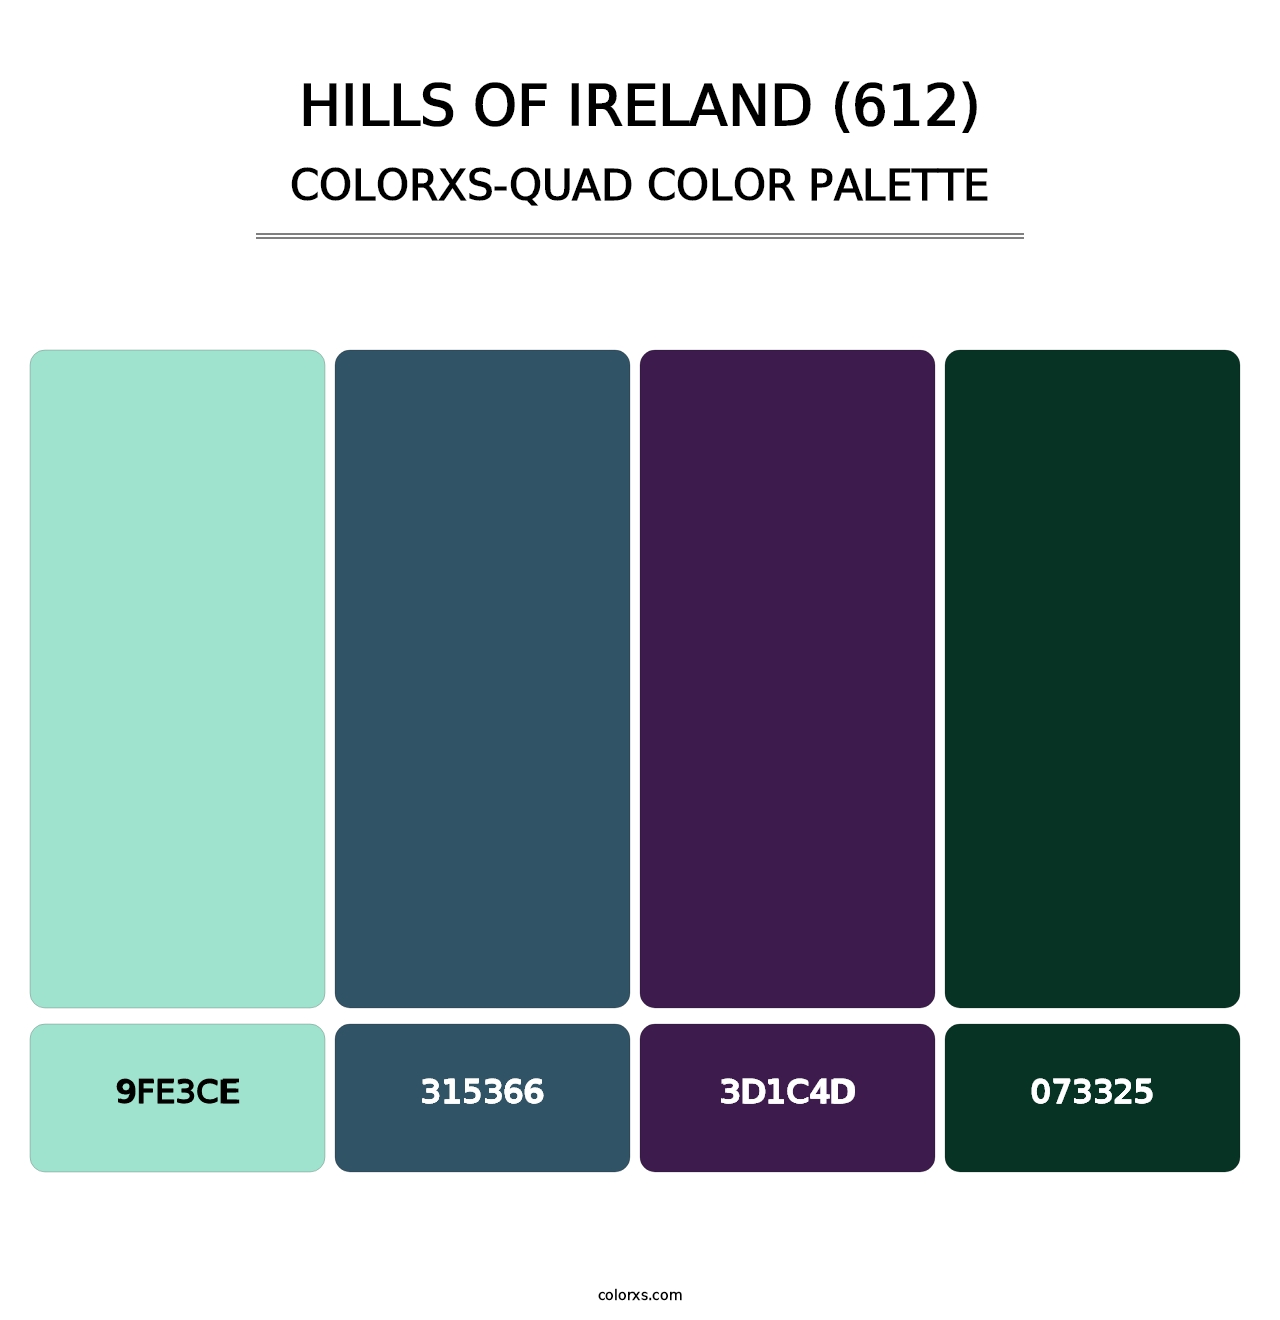 Hills of Ireland (612) - Colorxs Quad Palette